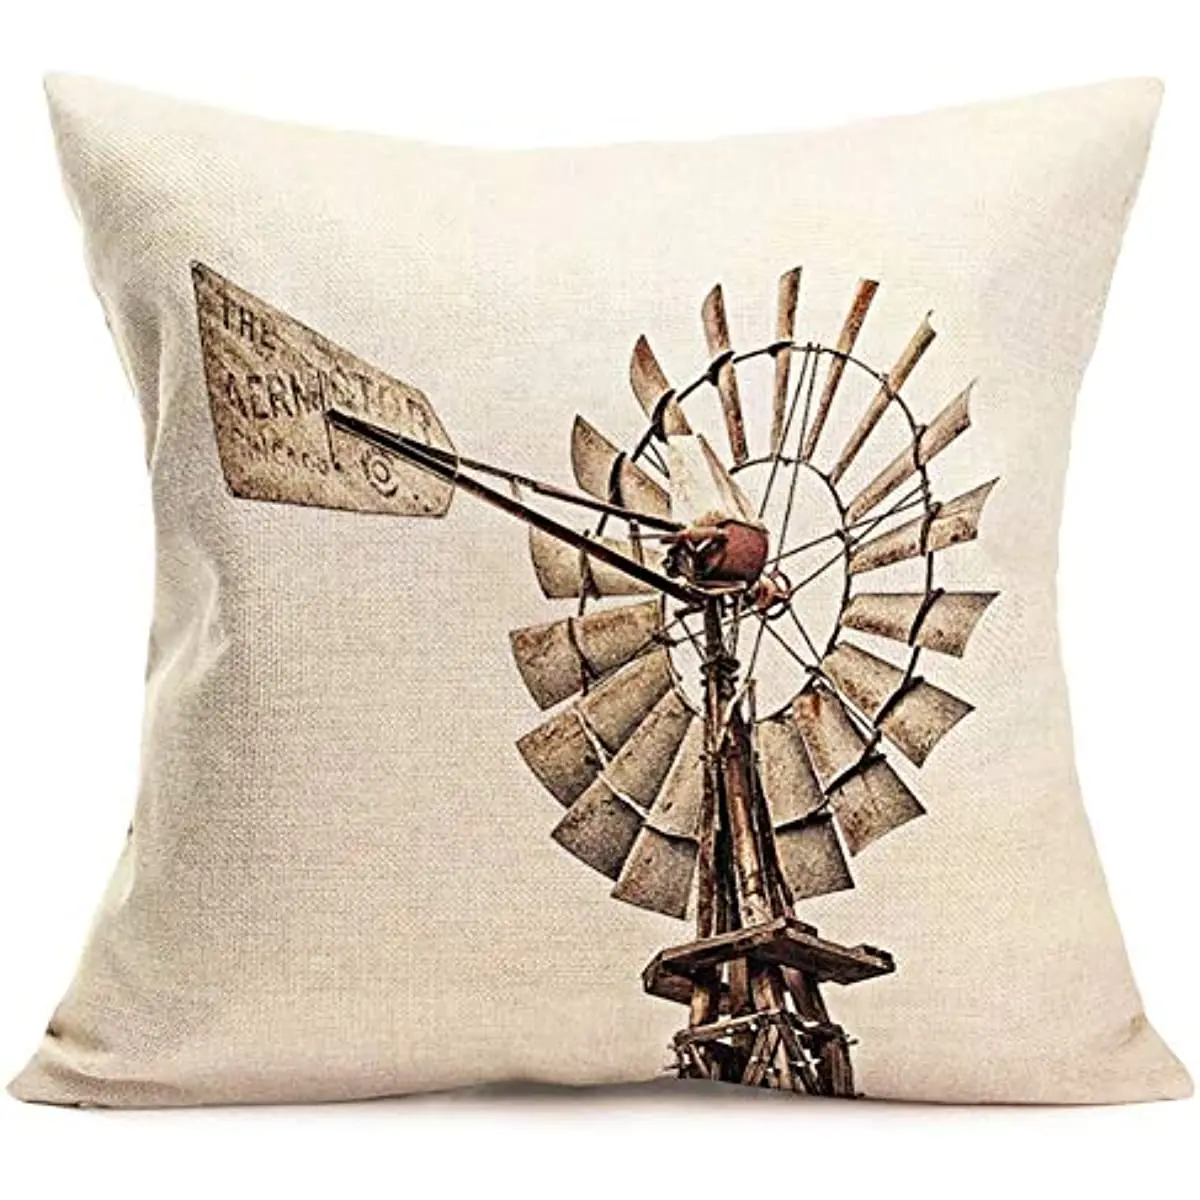 

Vintage Rural Wood Windmill Pillowcase Countryside Culture Farming Dutch Holland Design Decorative Cushion Cover for Home